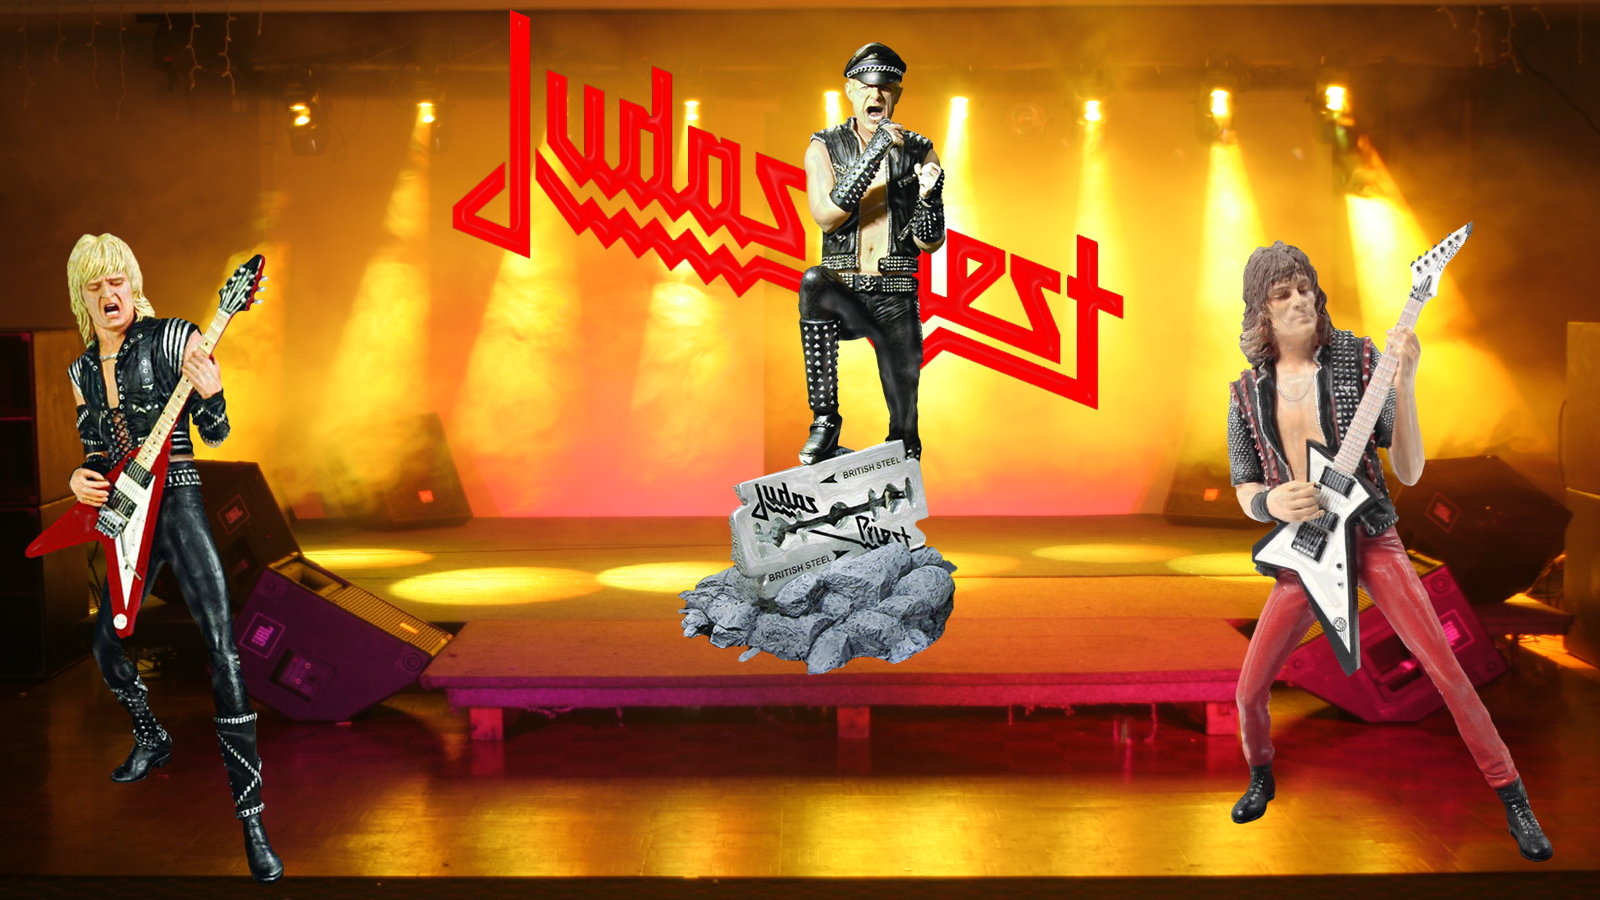 Free download Judas Priest background ID:447171 hd 1600x900 for desktop